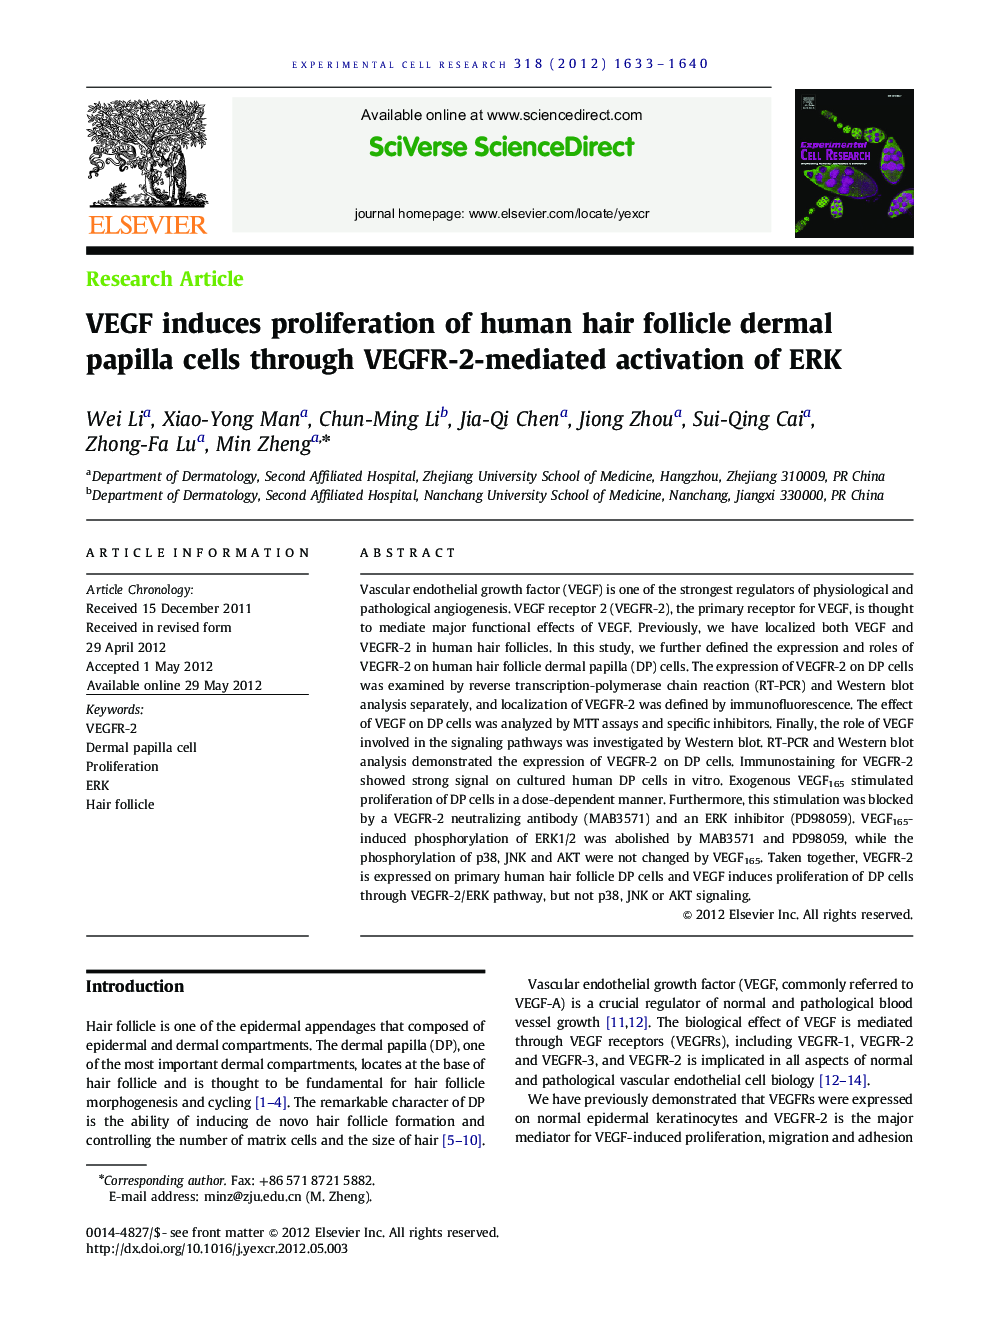 VEGF induces proliferation of human hair follicle dermal papilla cells through VEGFR-2-mediated activation of ERK